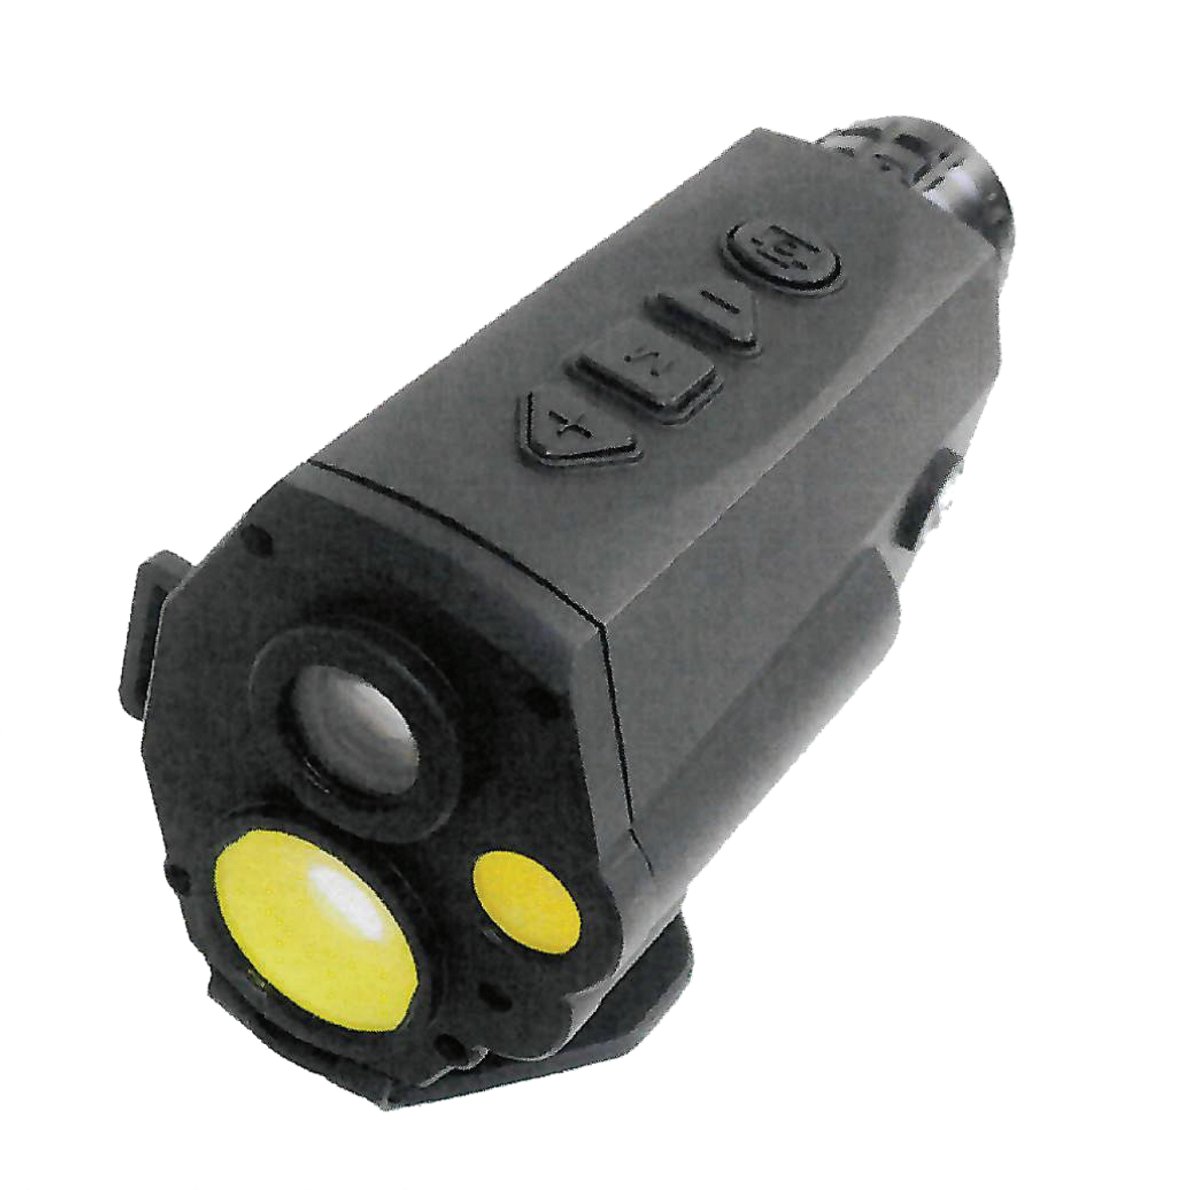 HML8 Laser Range Finder